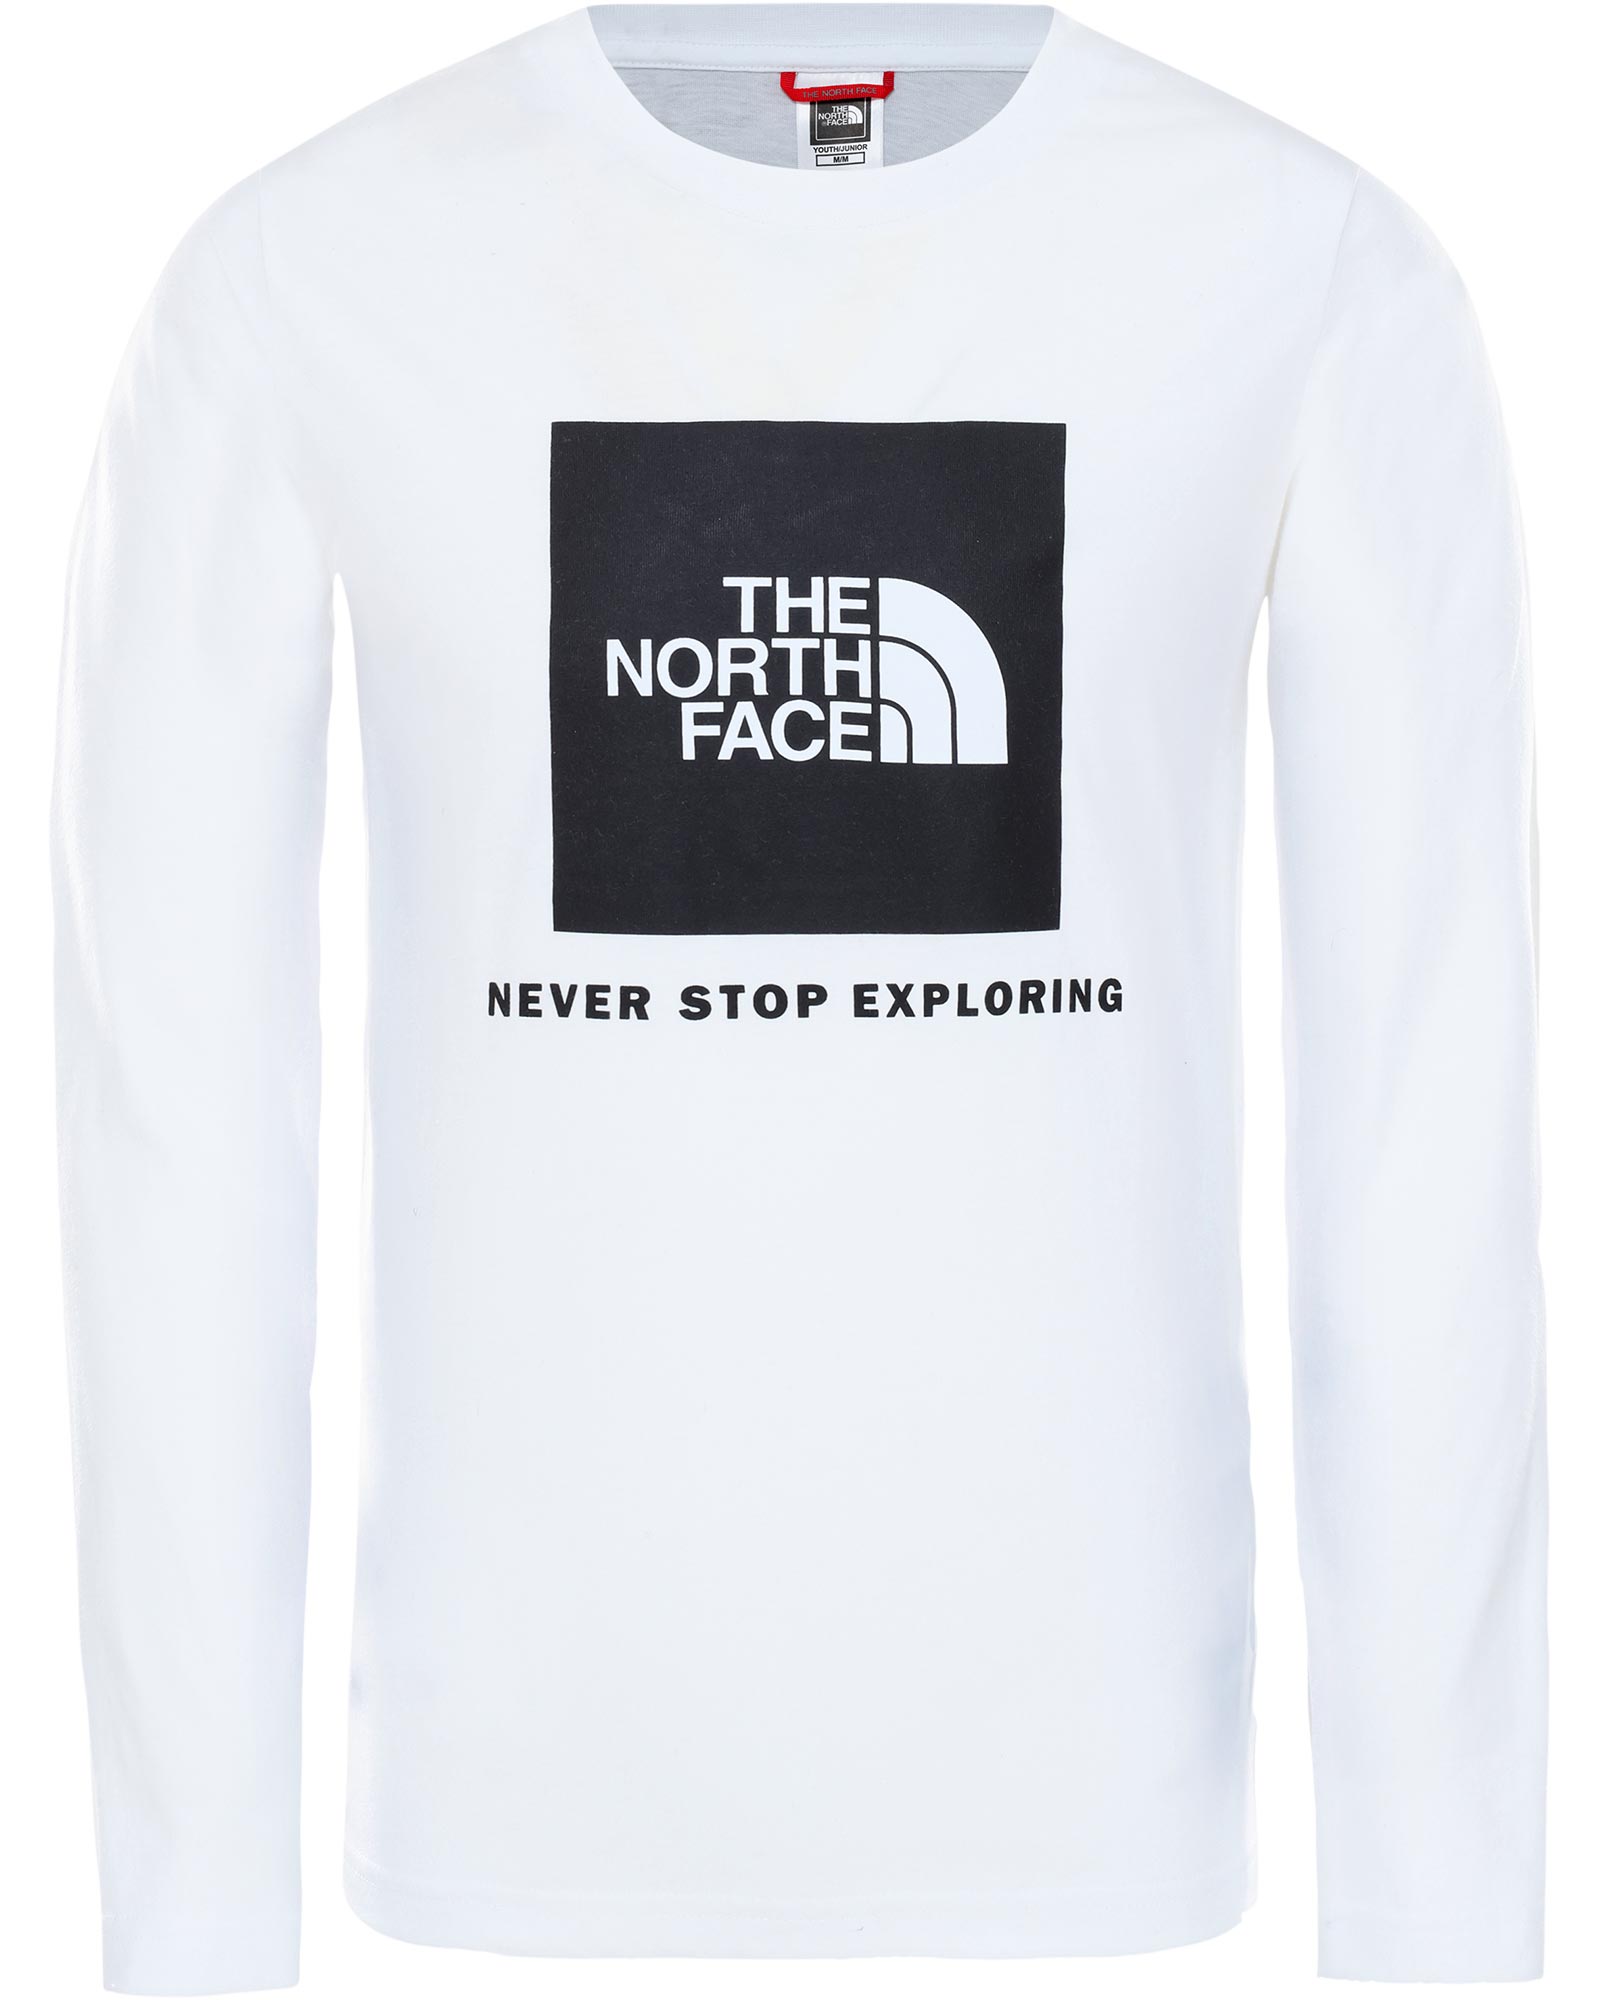 The North Face Box Kids Long Sleeve T-shirt